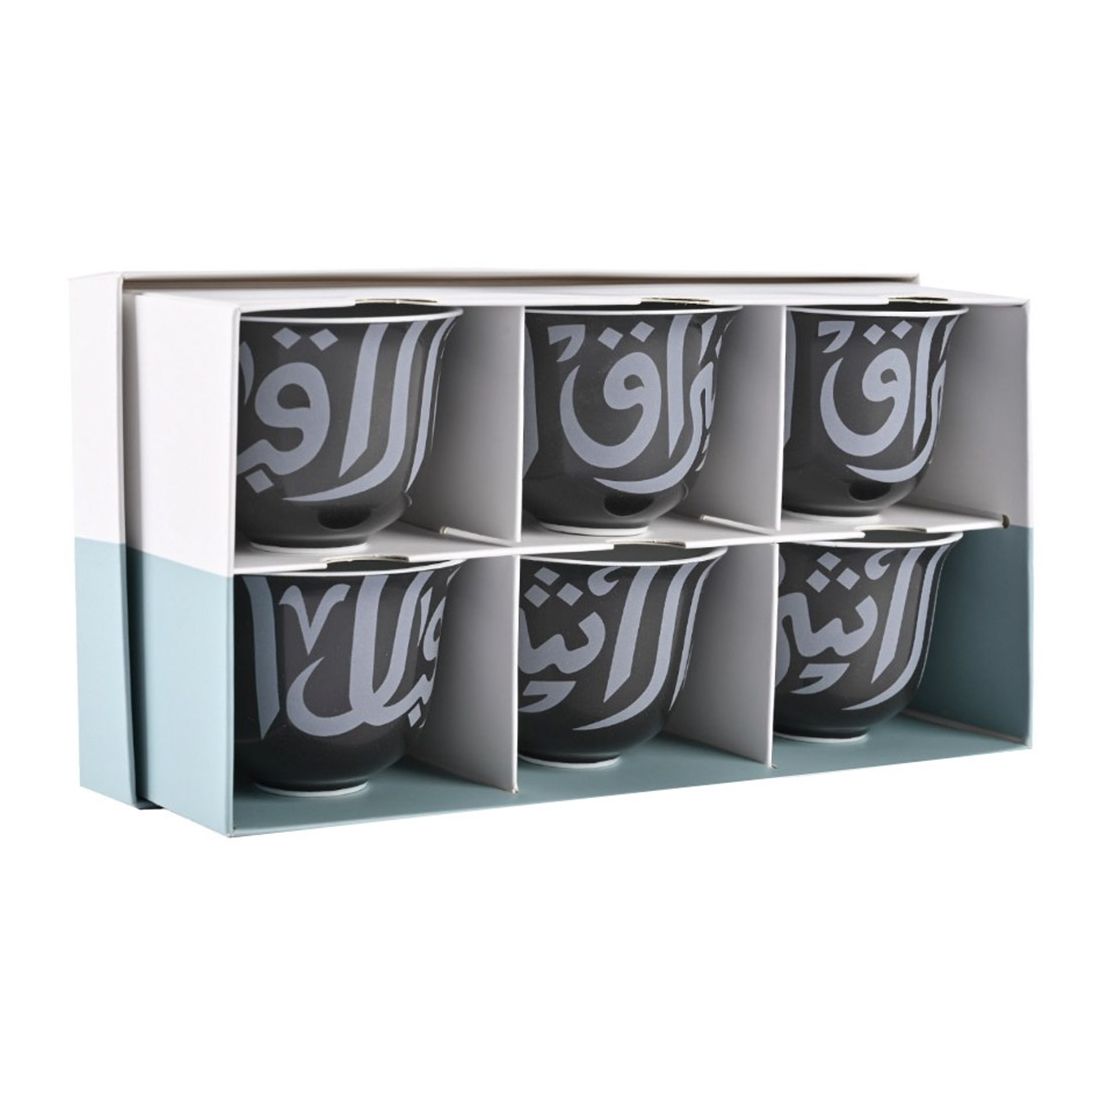 Silsal Ghida Arabic Coffee Cups Silver Design On Black Gift Box Set of 6